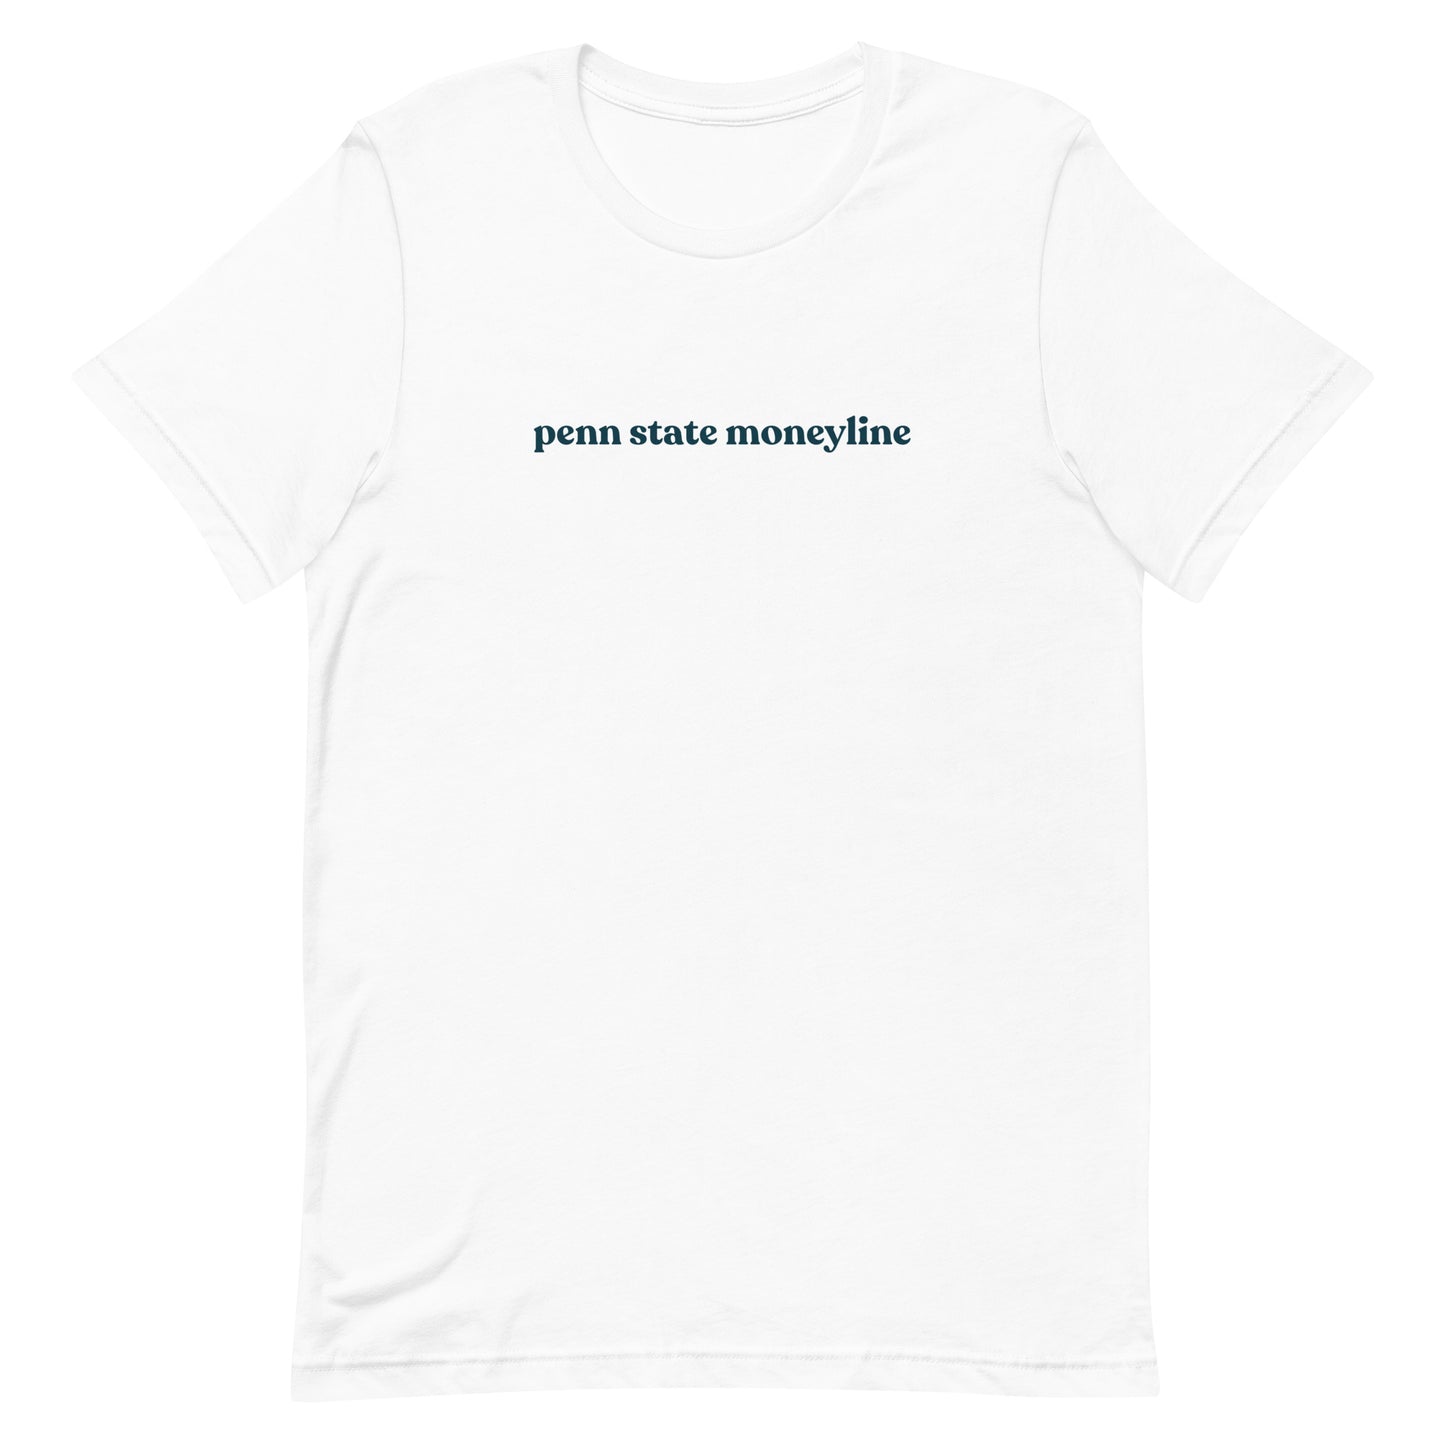 penn state money line t shirt